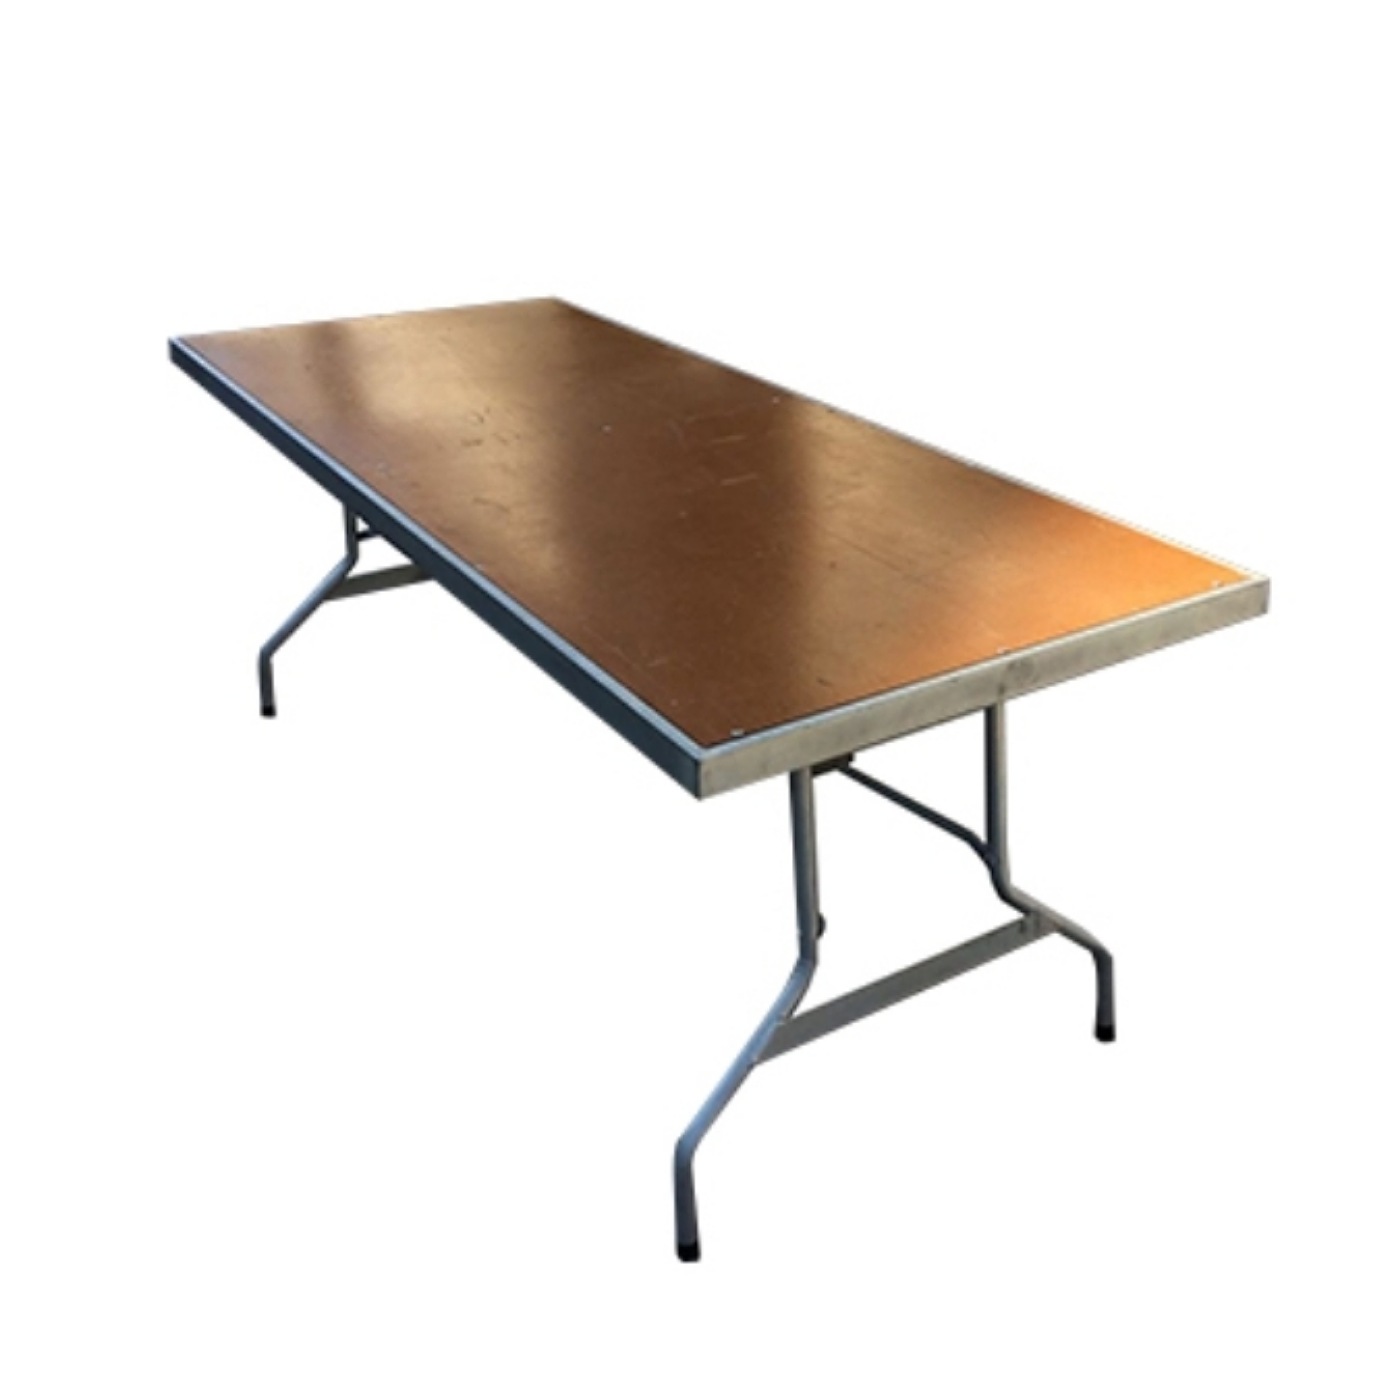 Fold-able Rectangular Steel Frame Table.